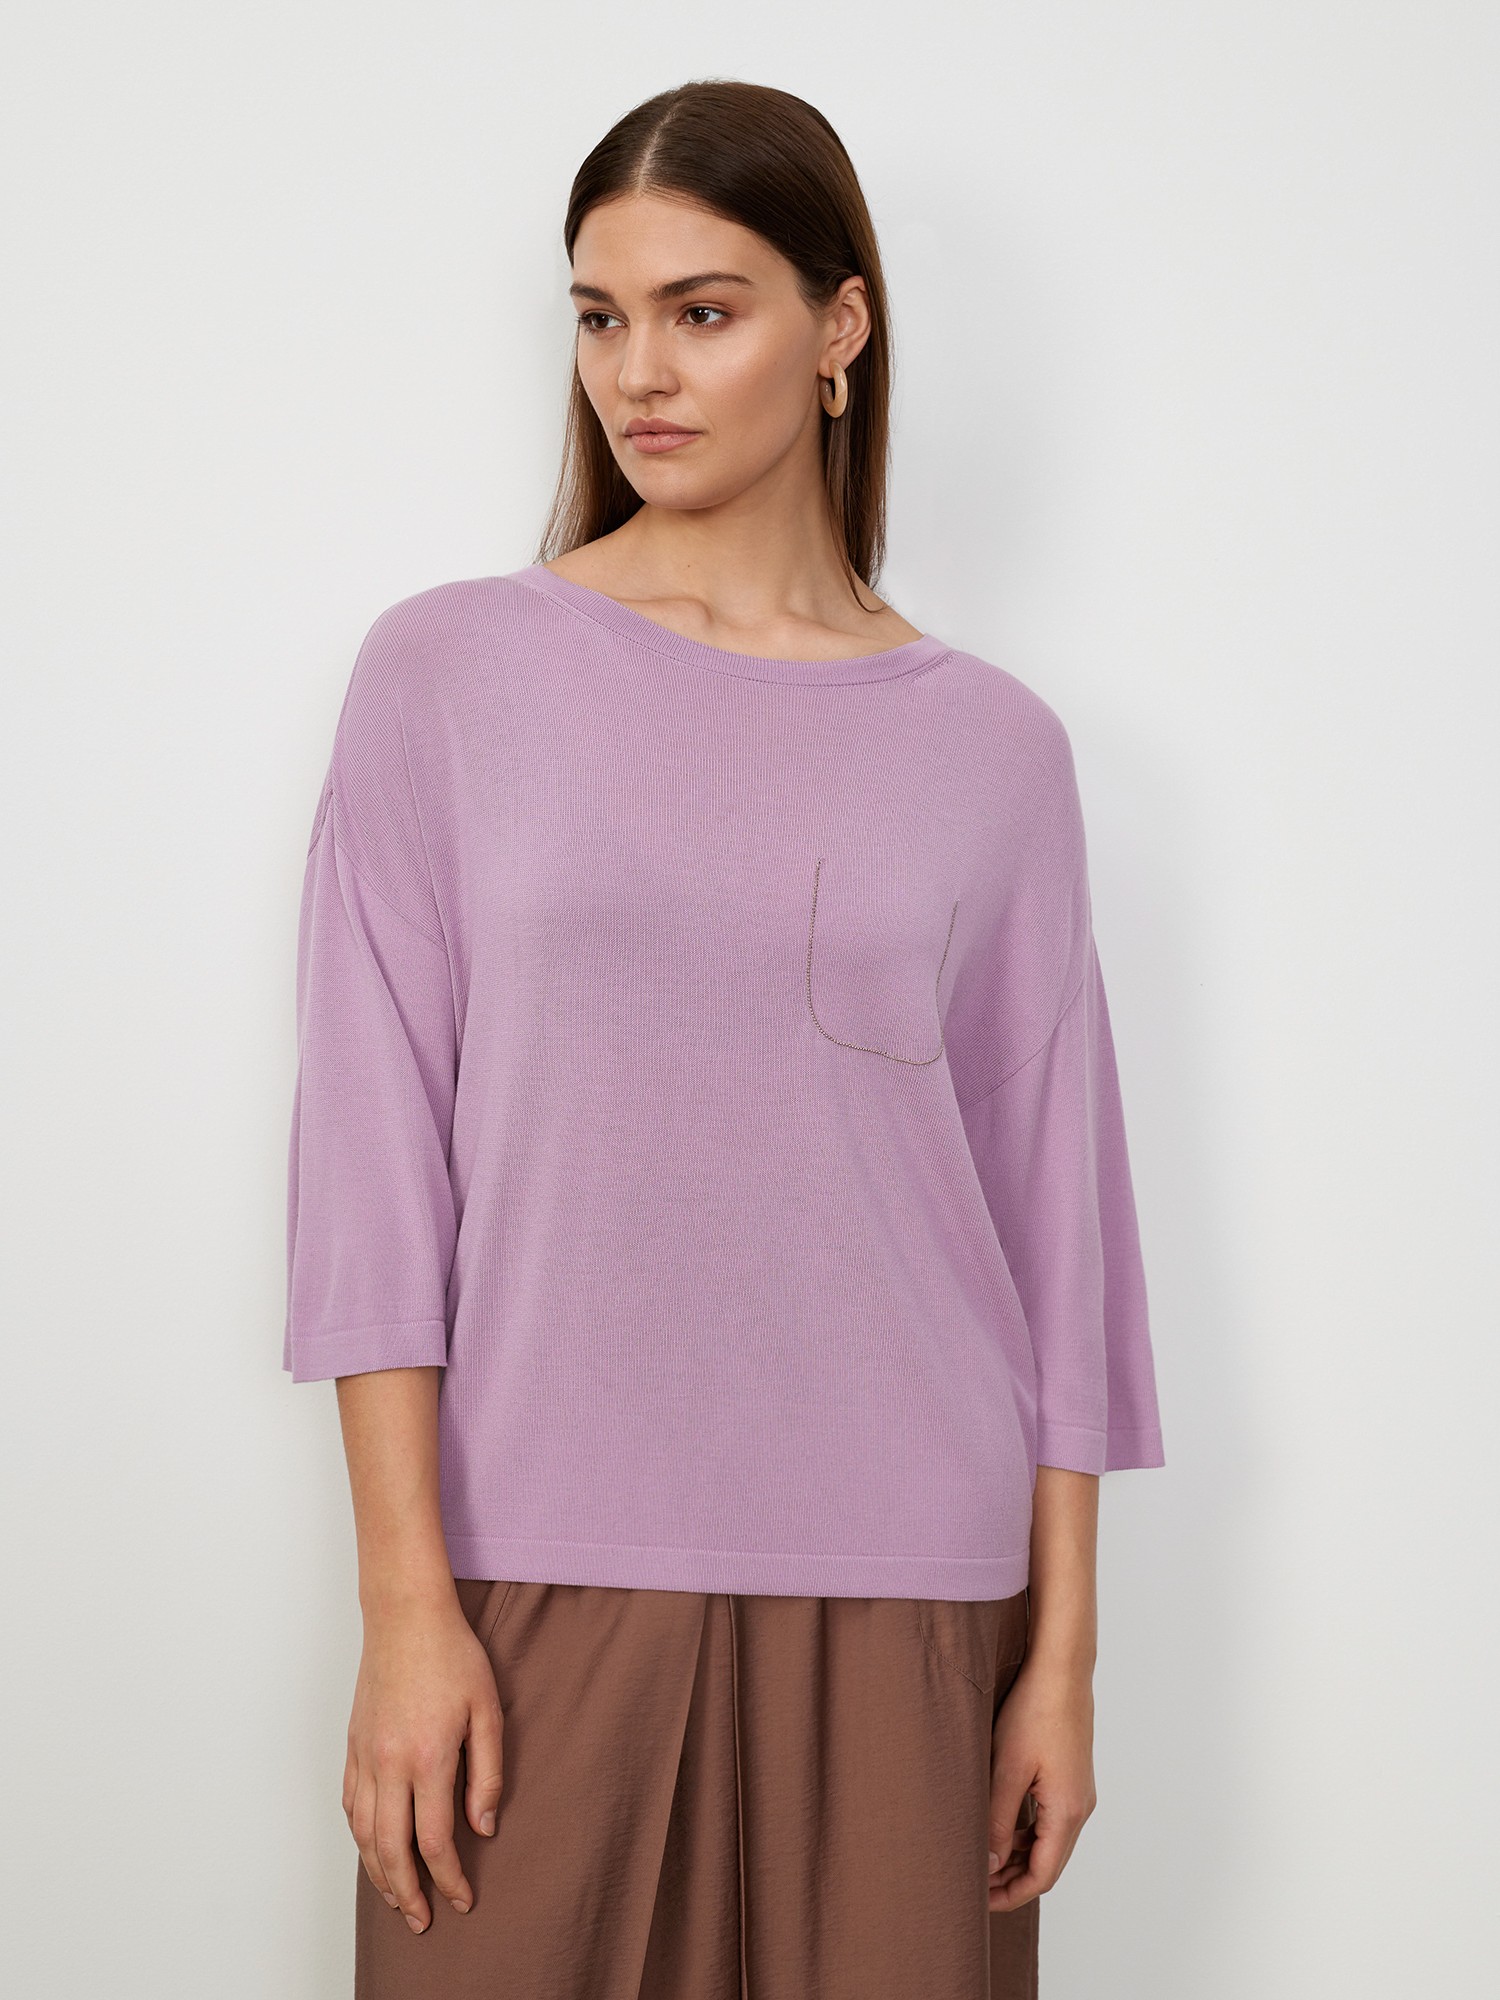 Блуза вязаная с монилью Lalis BL1069V, цвет фиолетовый, размер 54 - фото 1